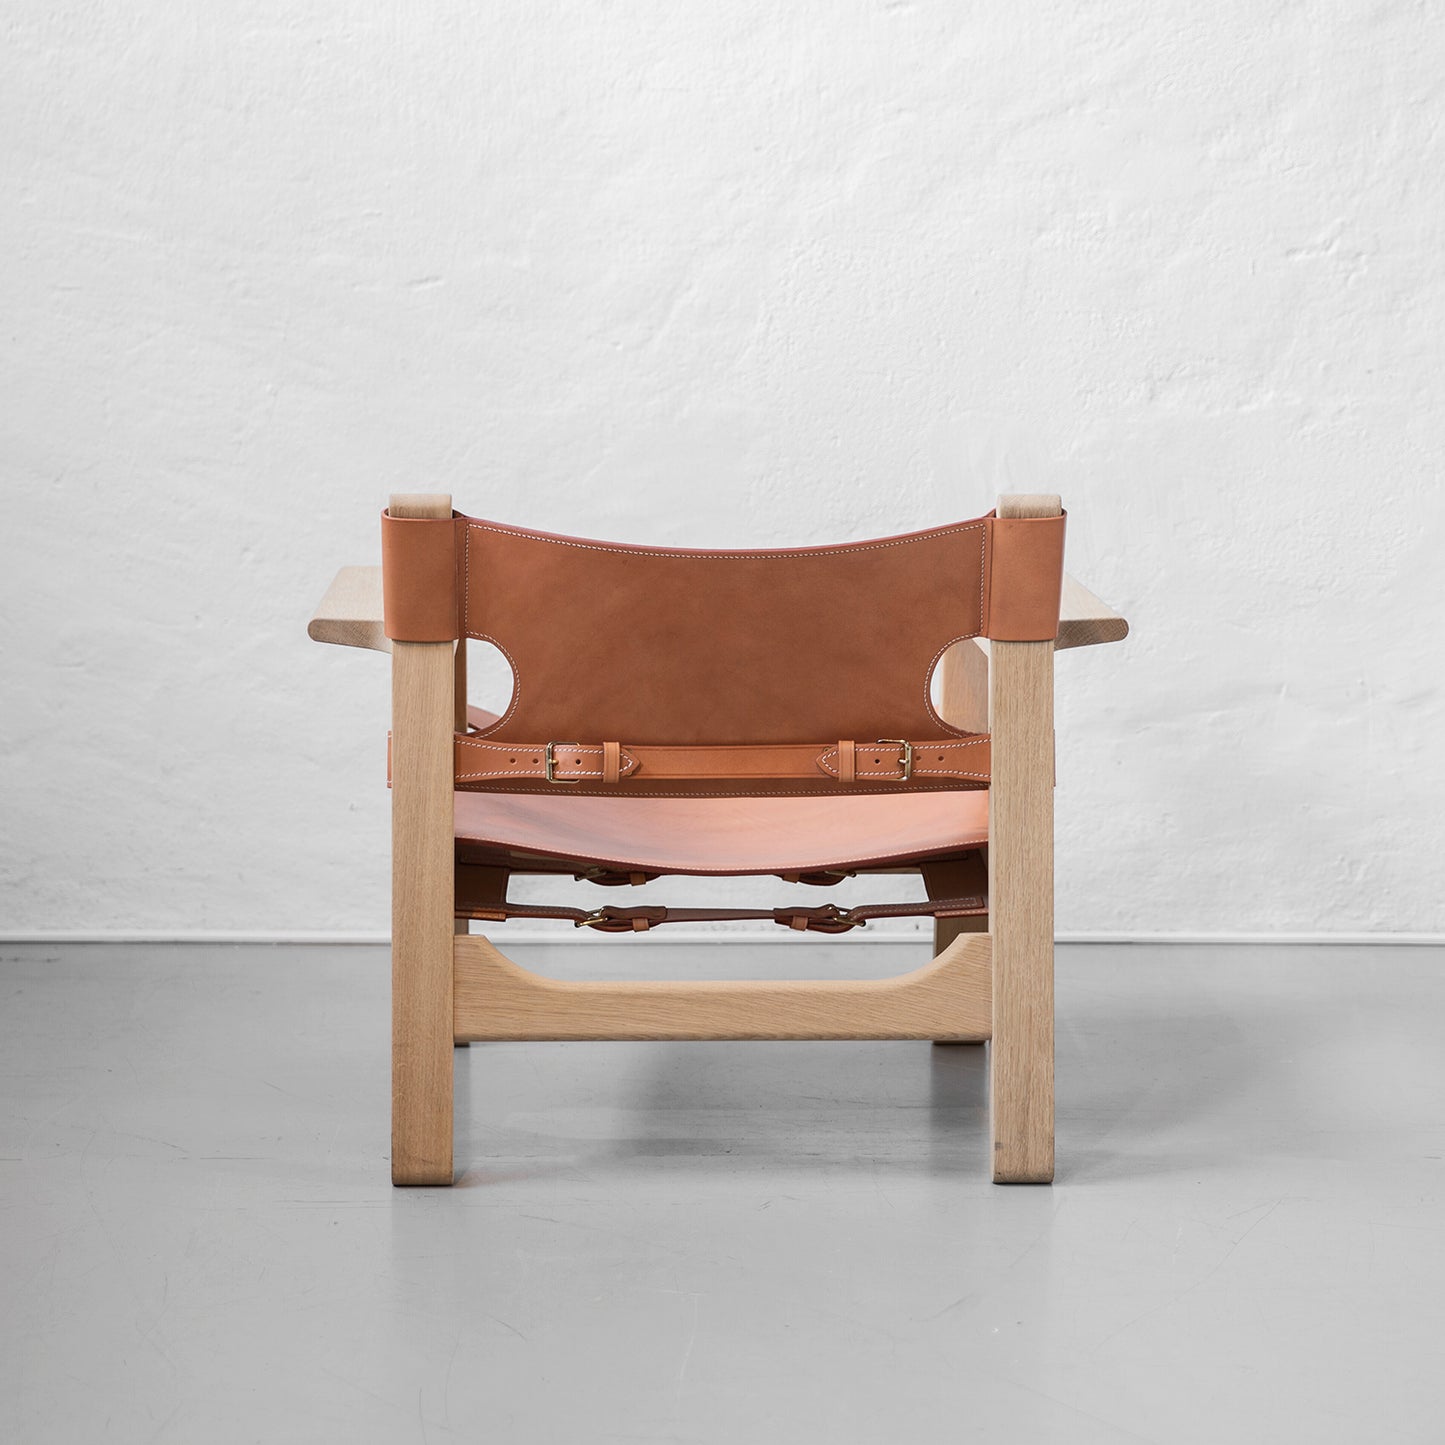 The Spanish Chair - Model 2226